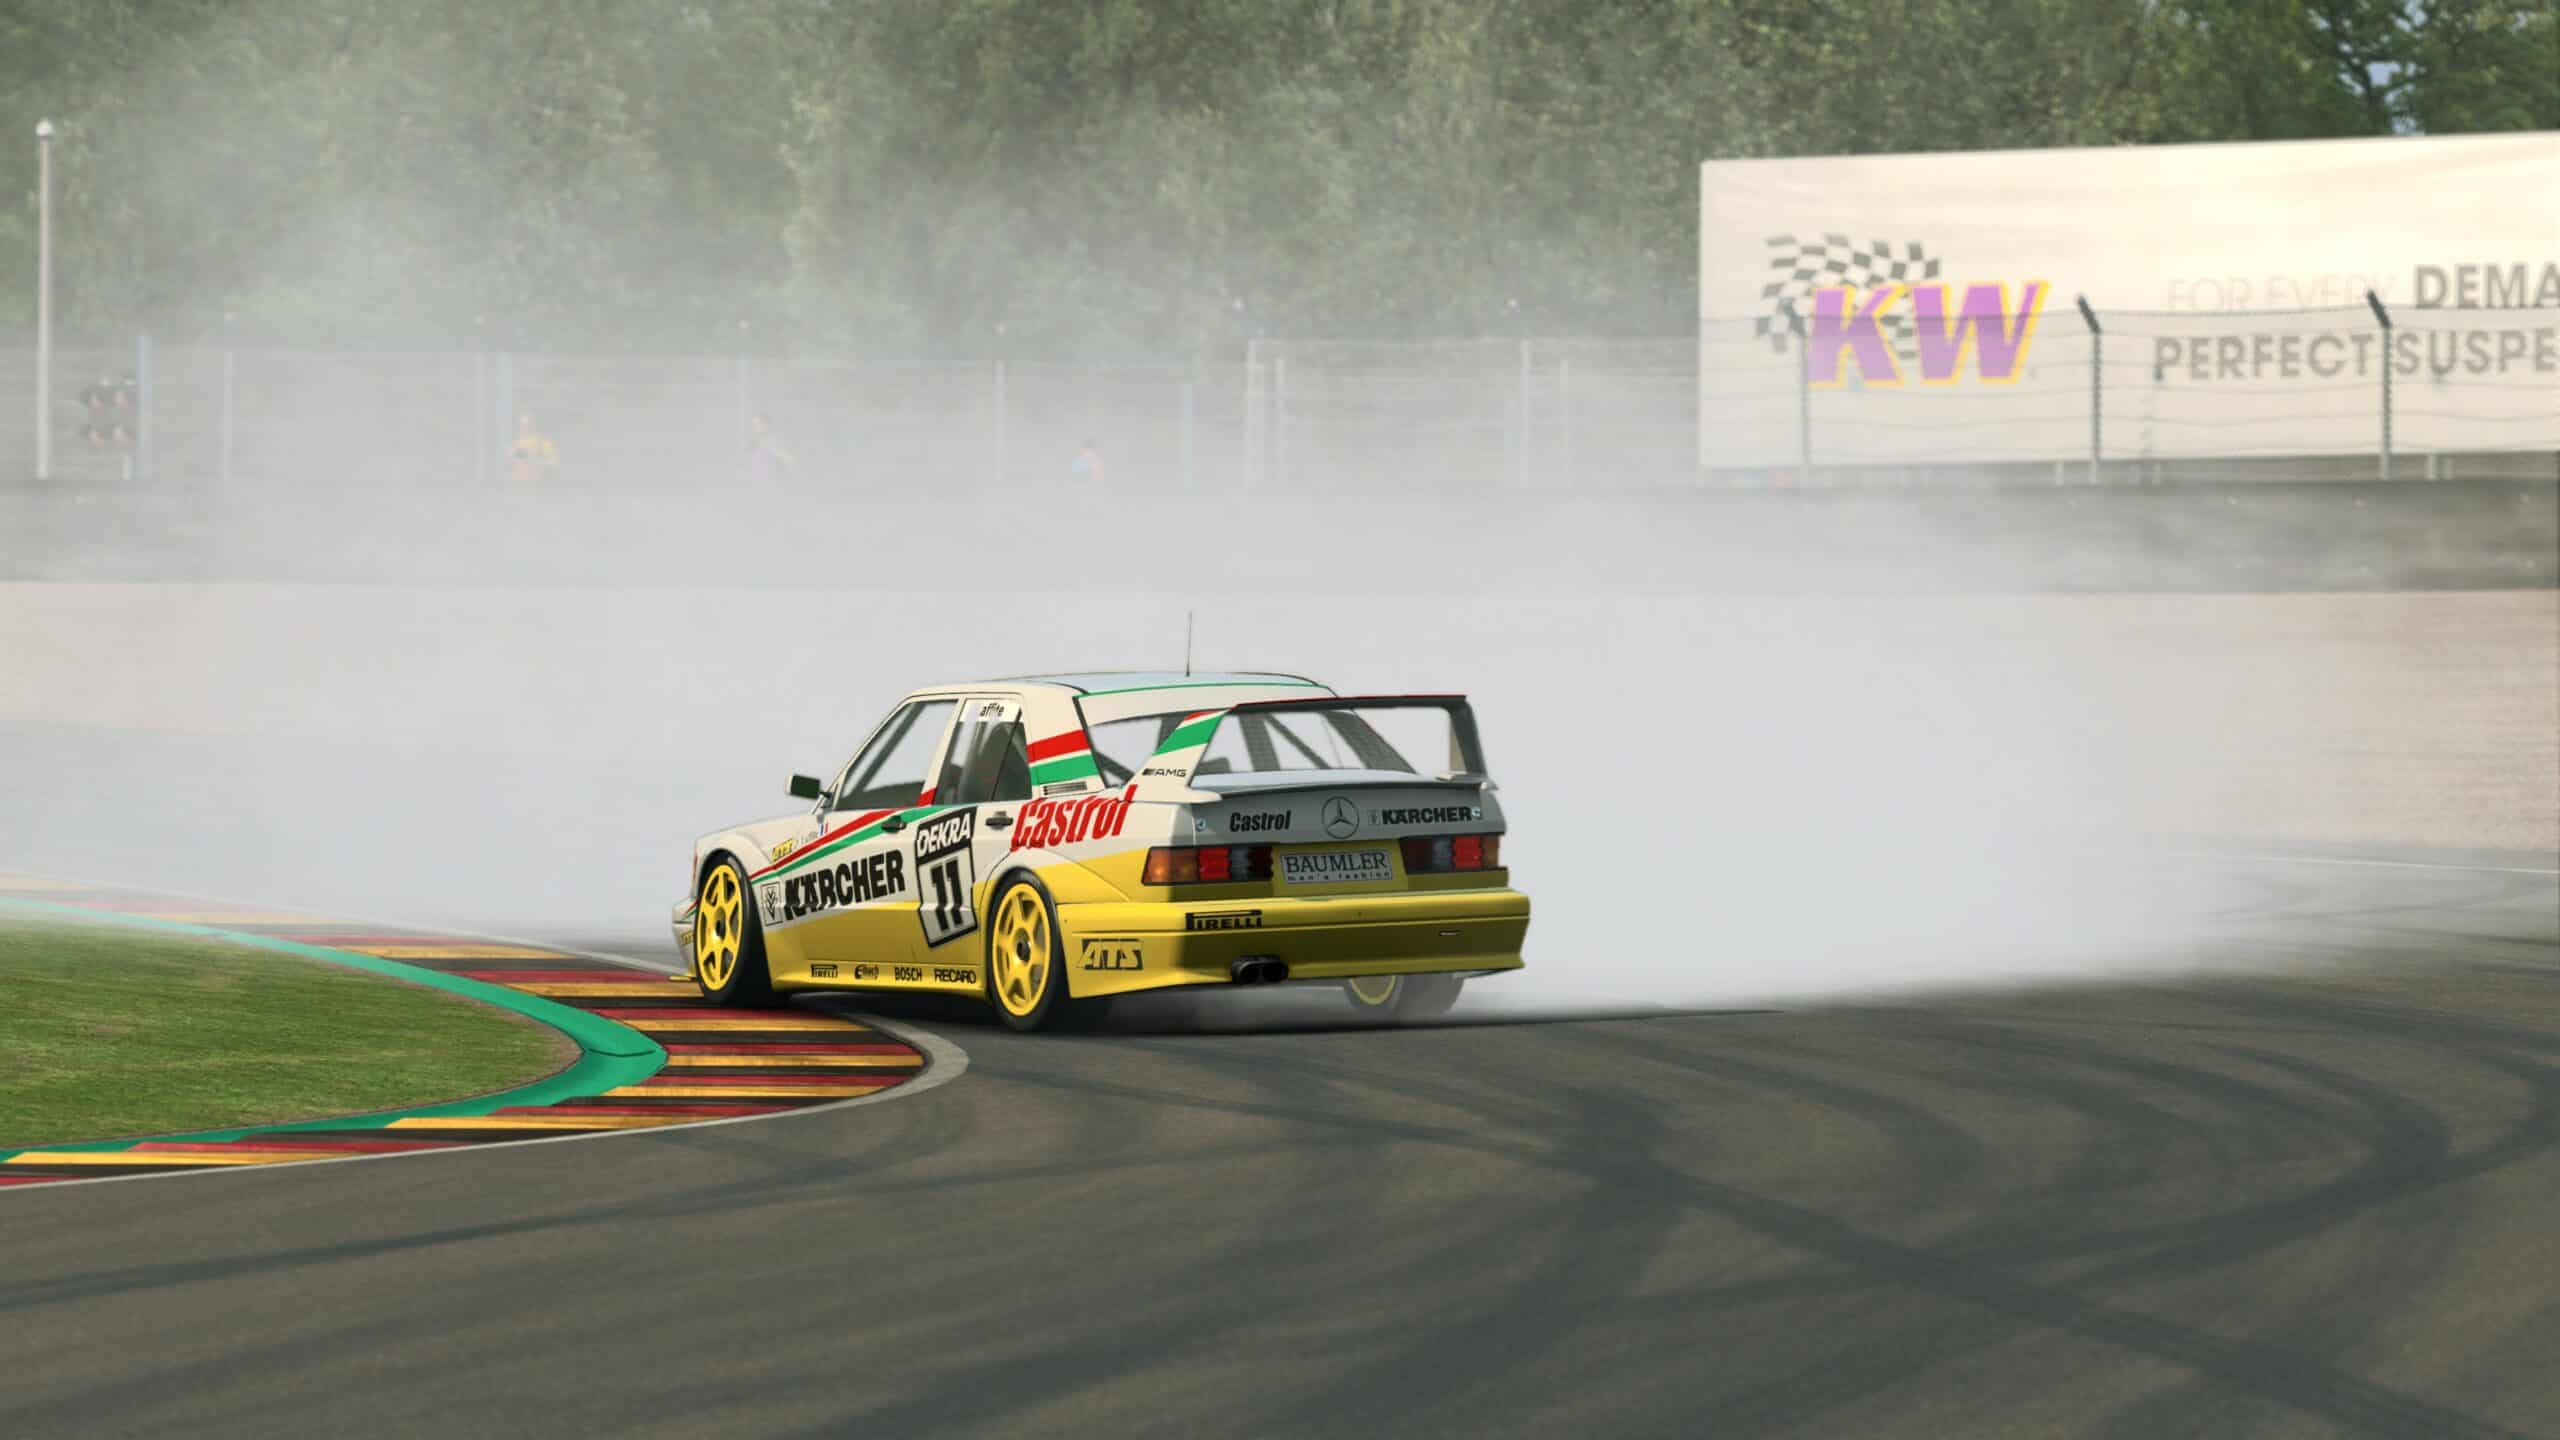 RaceRoom Racing Experience, June 2021 update, tyre smoke